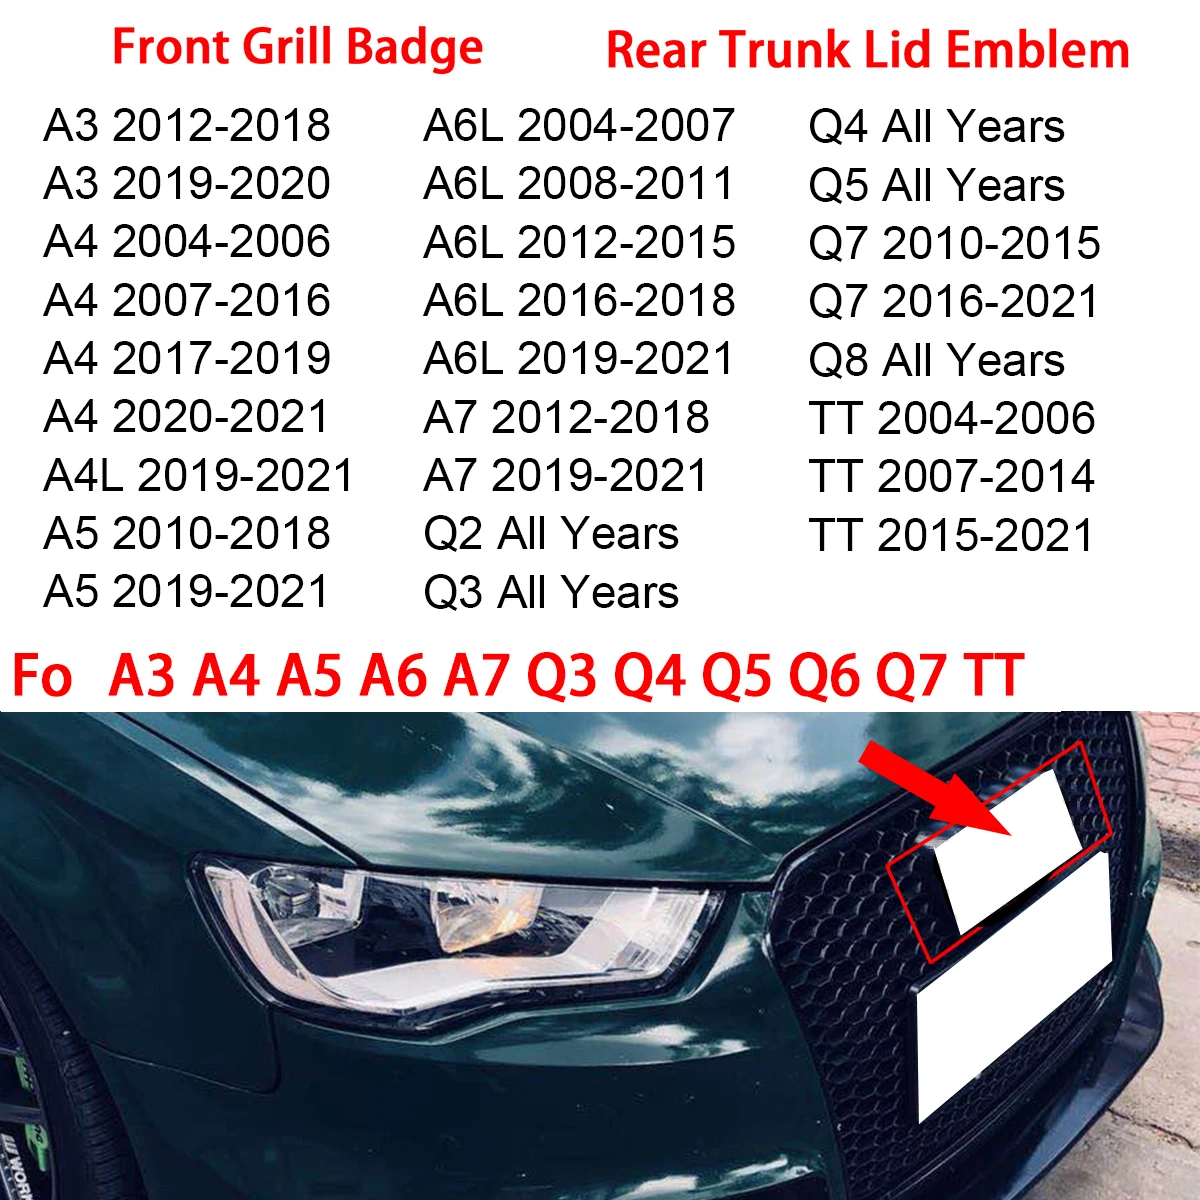 For A3 A4 A5 A6 A7 Q3 Q4 Q5 Q6 Q7 TT Gloss Black 4 Ring Car Hood Front Bonnet Grill and Rear Trunk Emblem Logo Badge